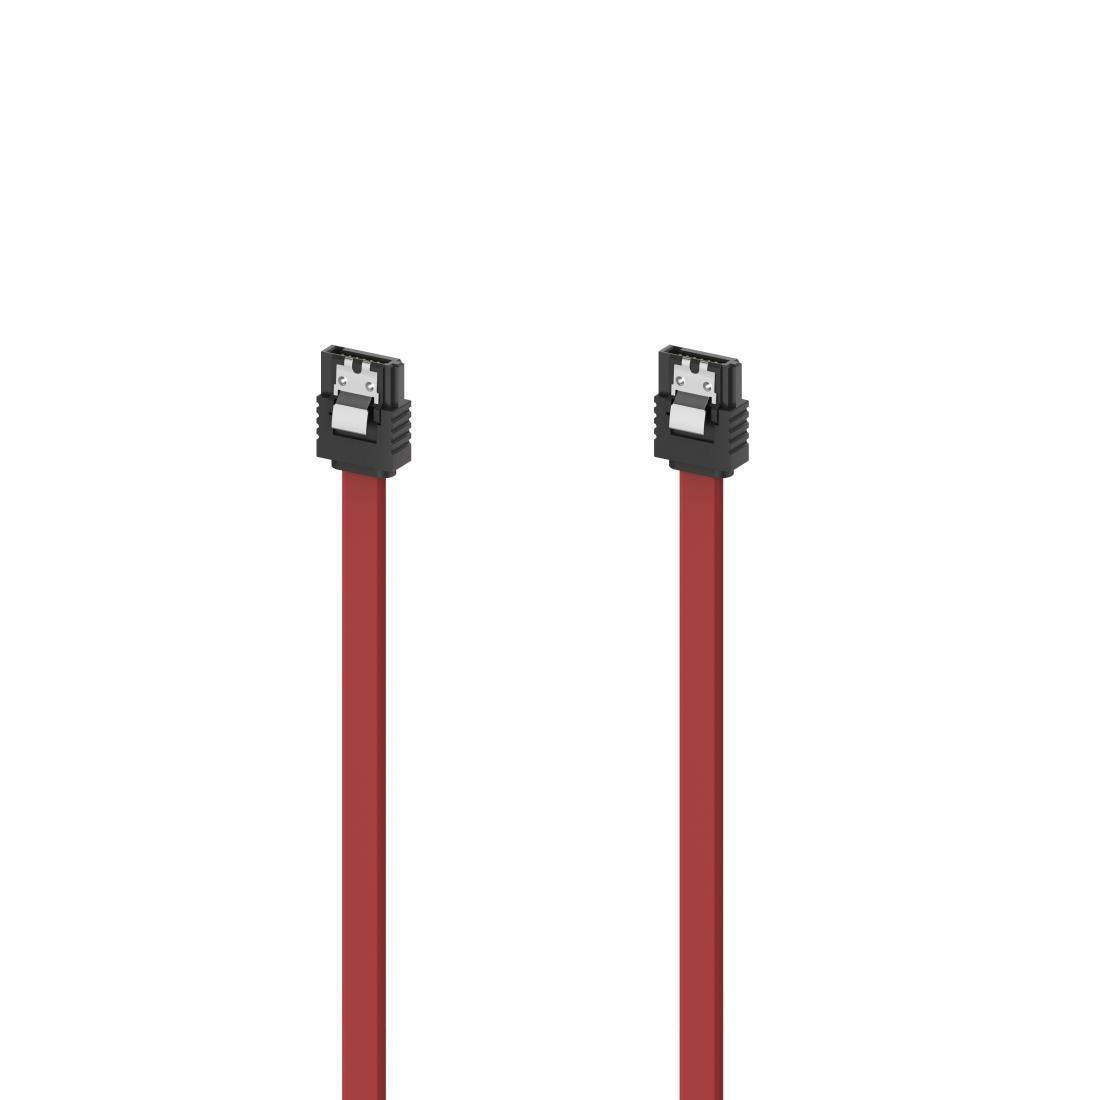 Hama 200739 W128824501 9 Sata Cable 0.45 M Red 